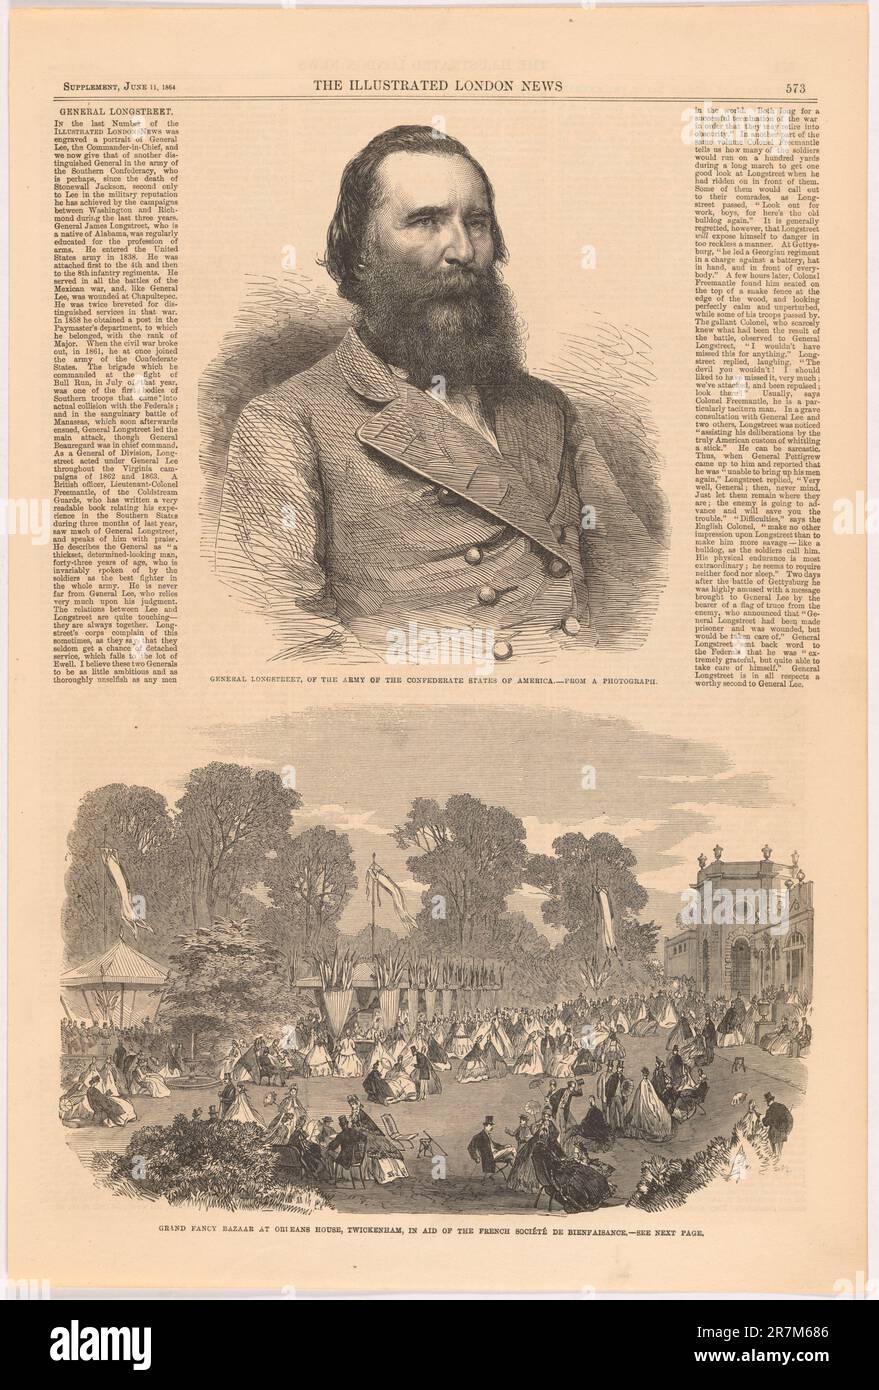 James Longstreet 1864 Stock Photo